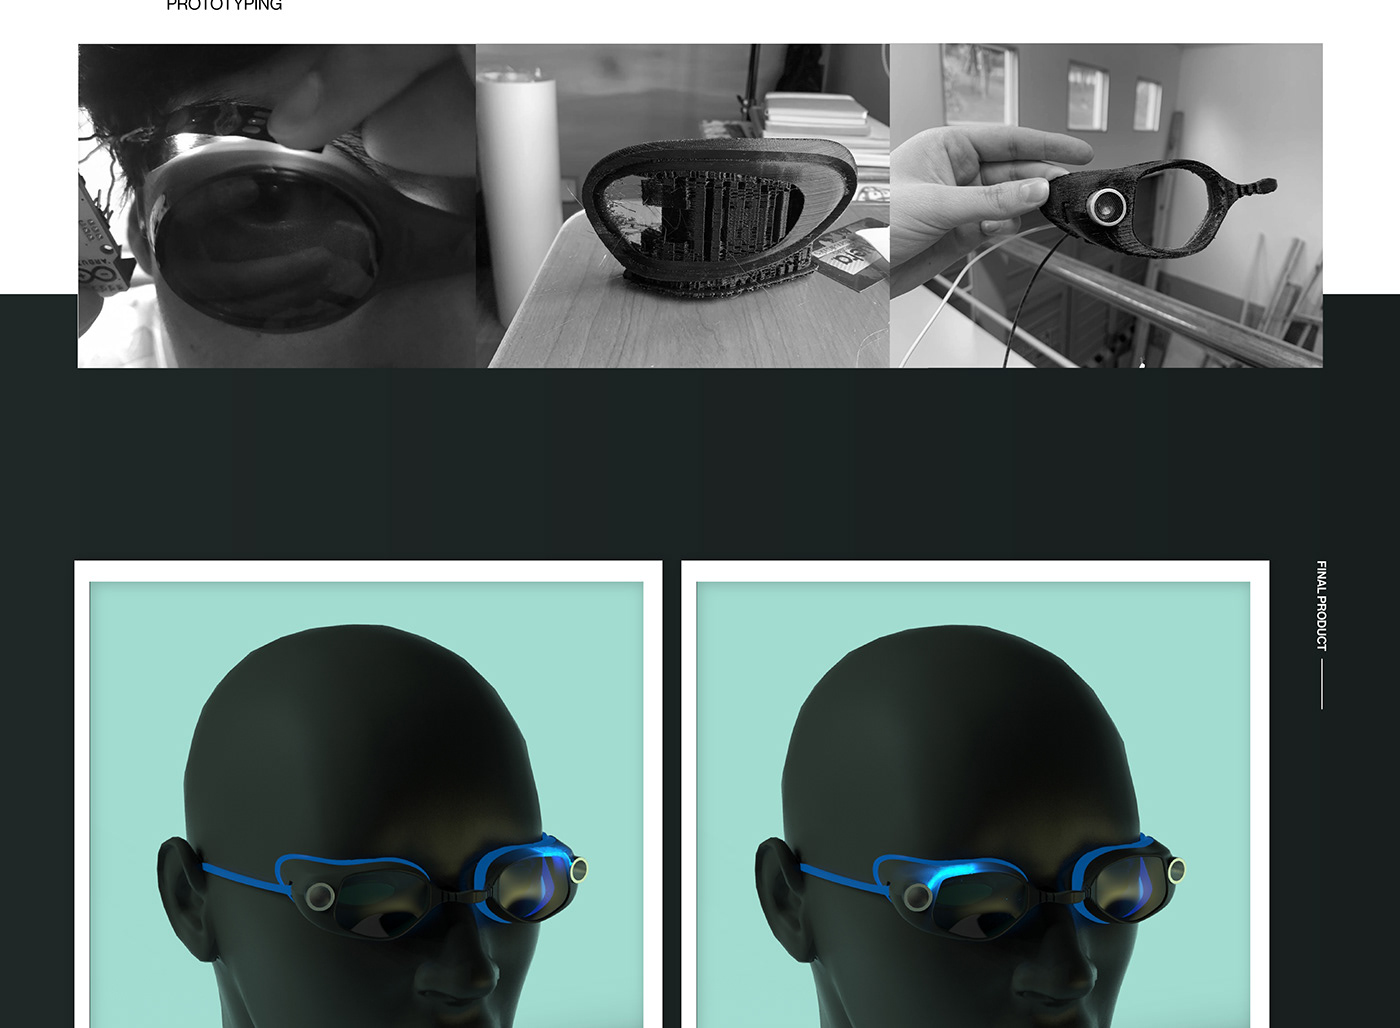 design goggles interactive product Render sonar swimming Triathlon